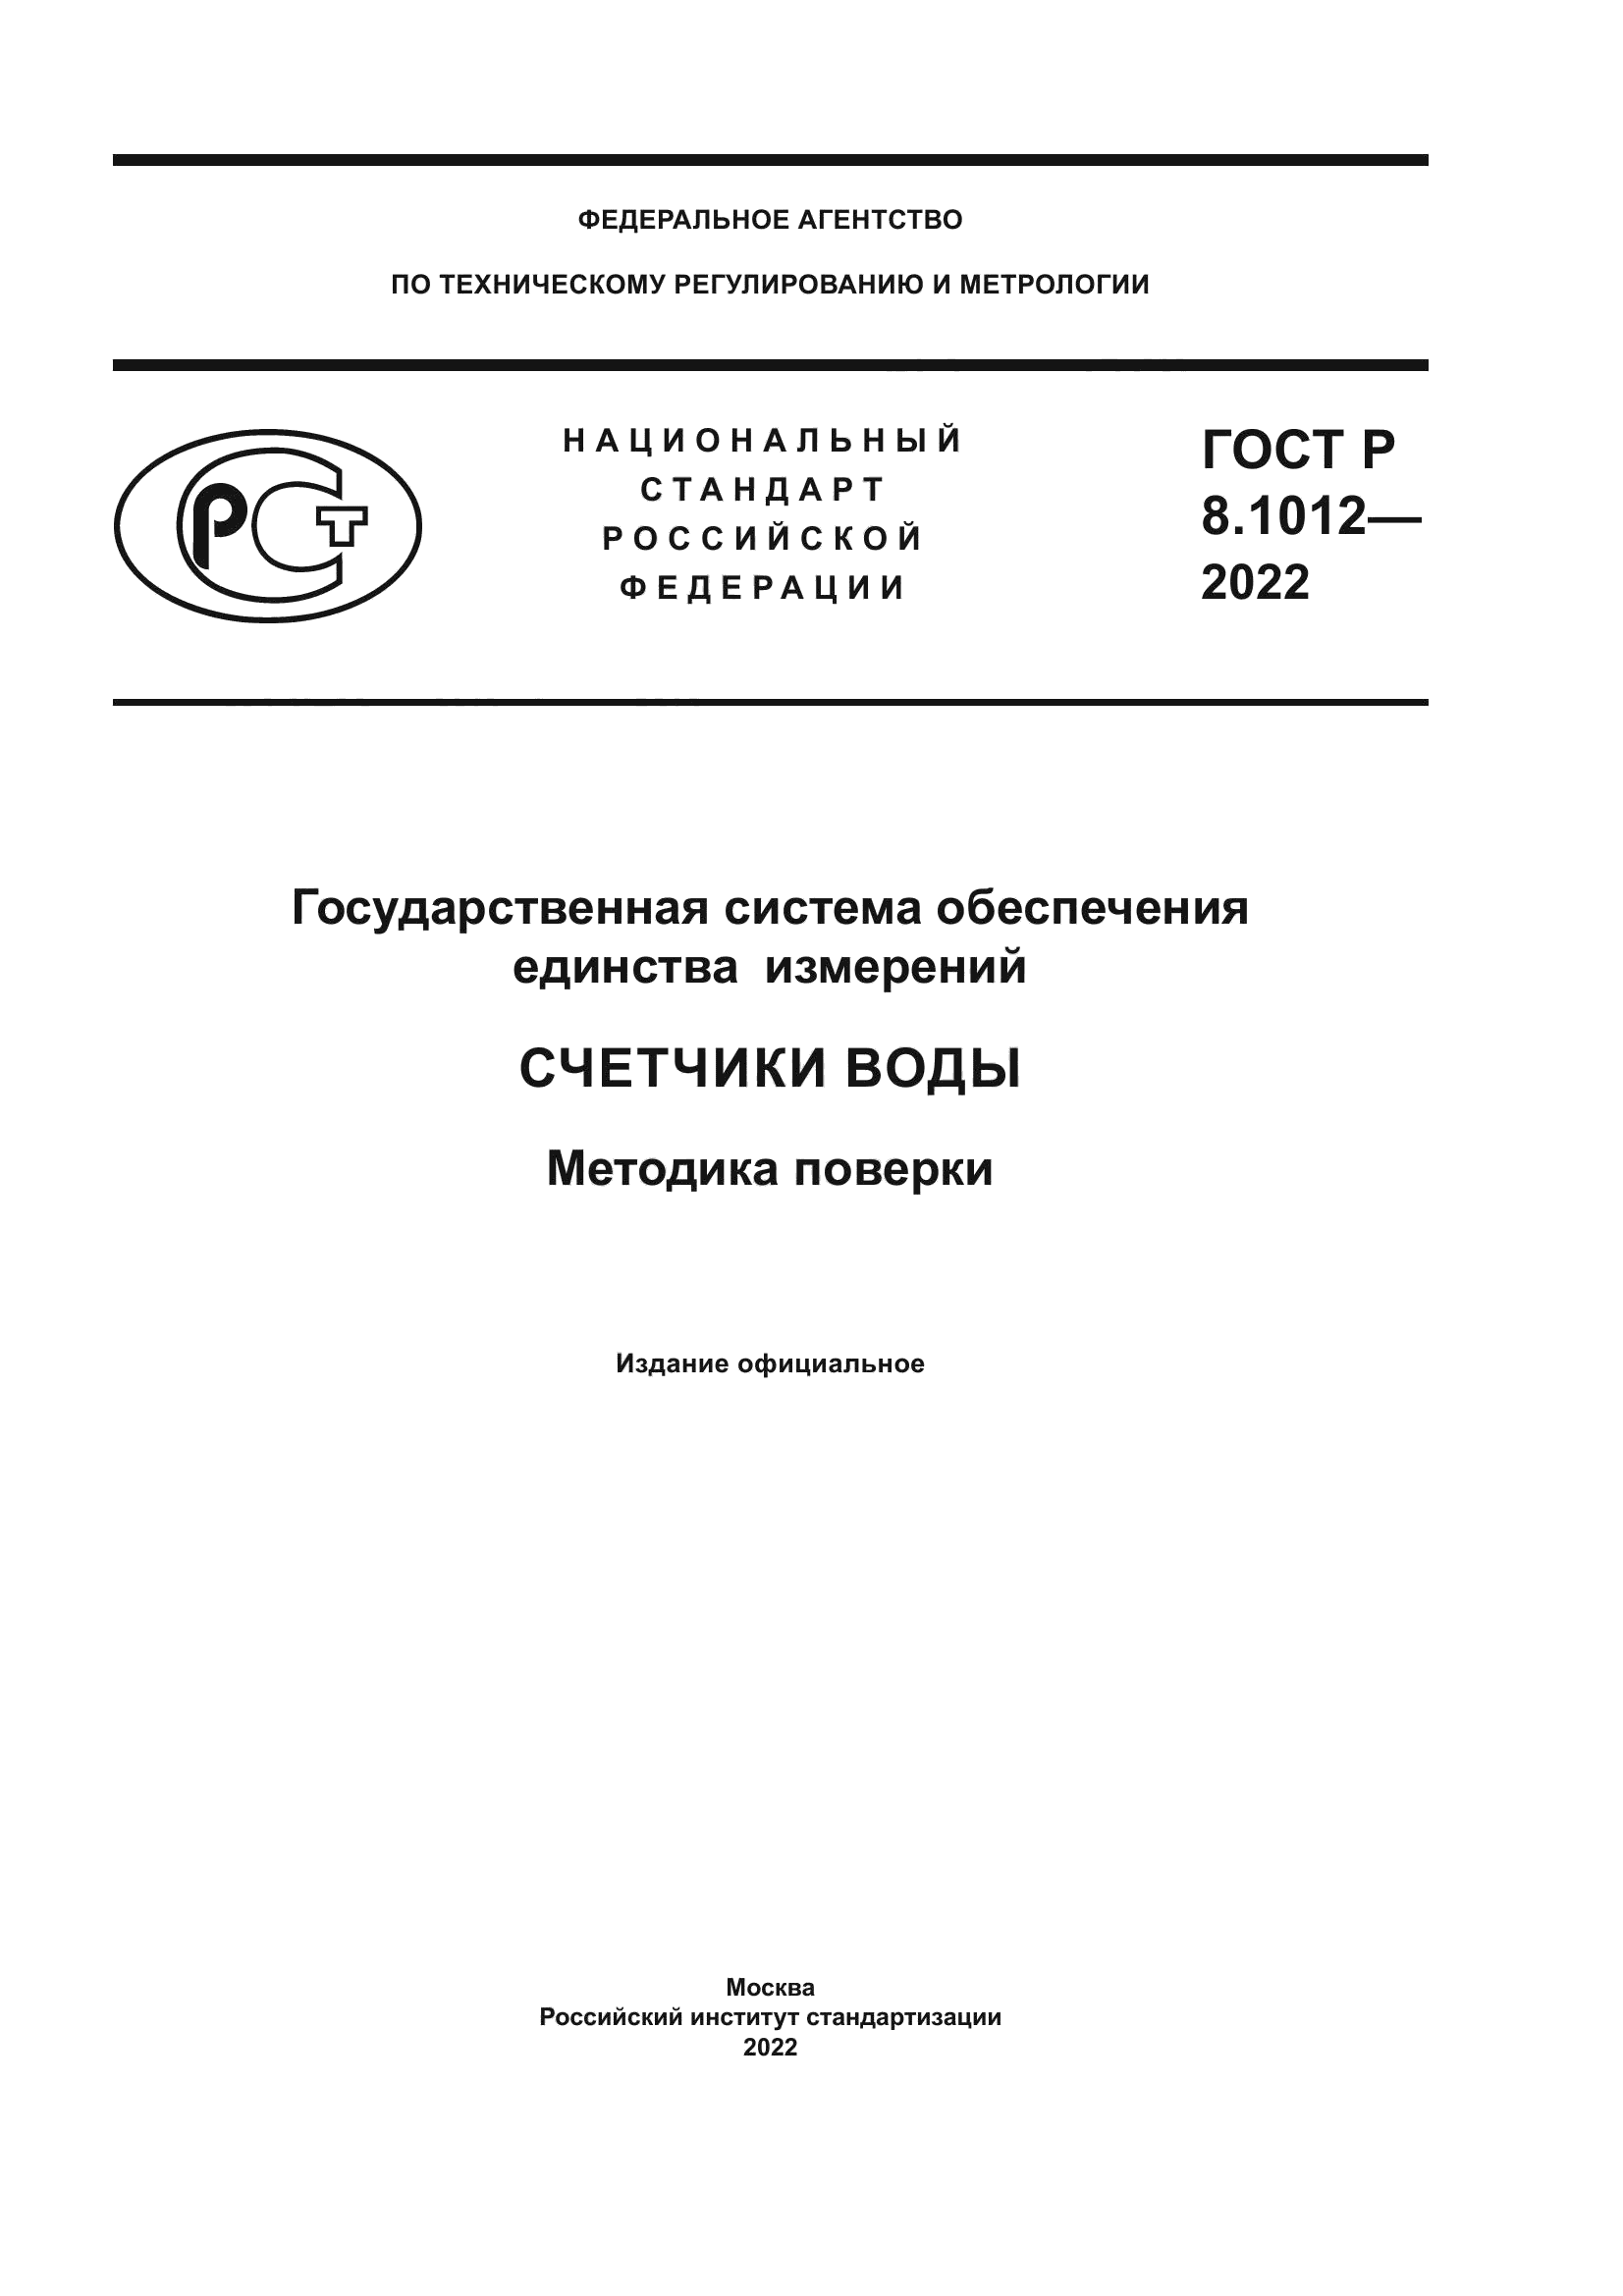 ГОСТ Р 8.1012-2022